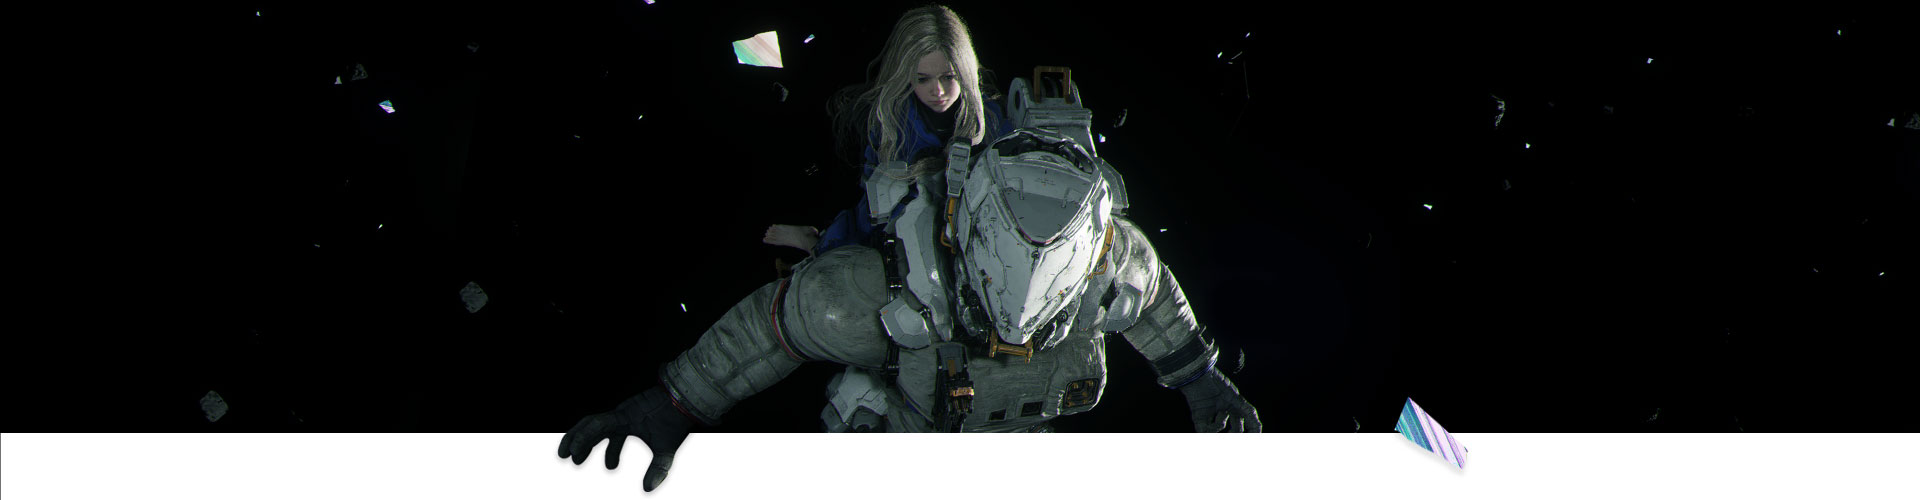 A girl rides on an astronaut through space